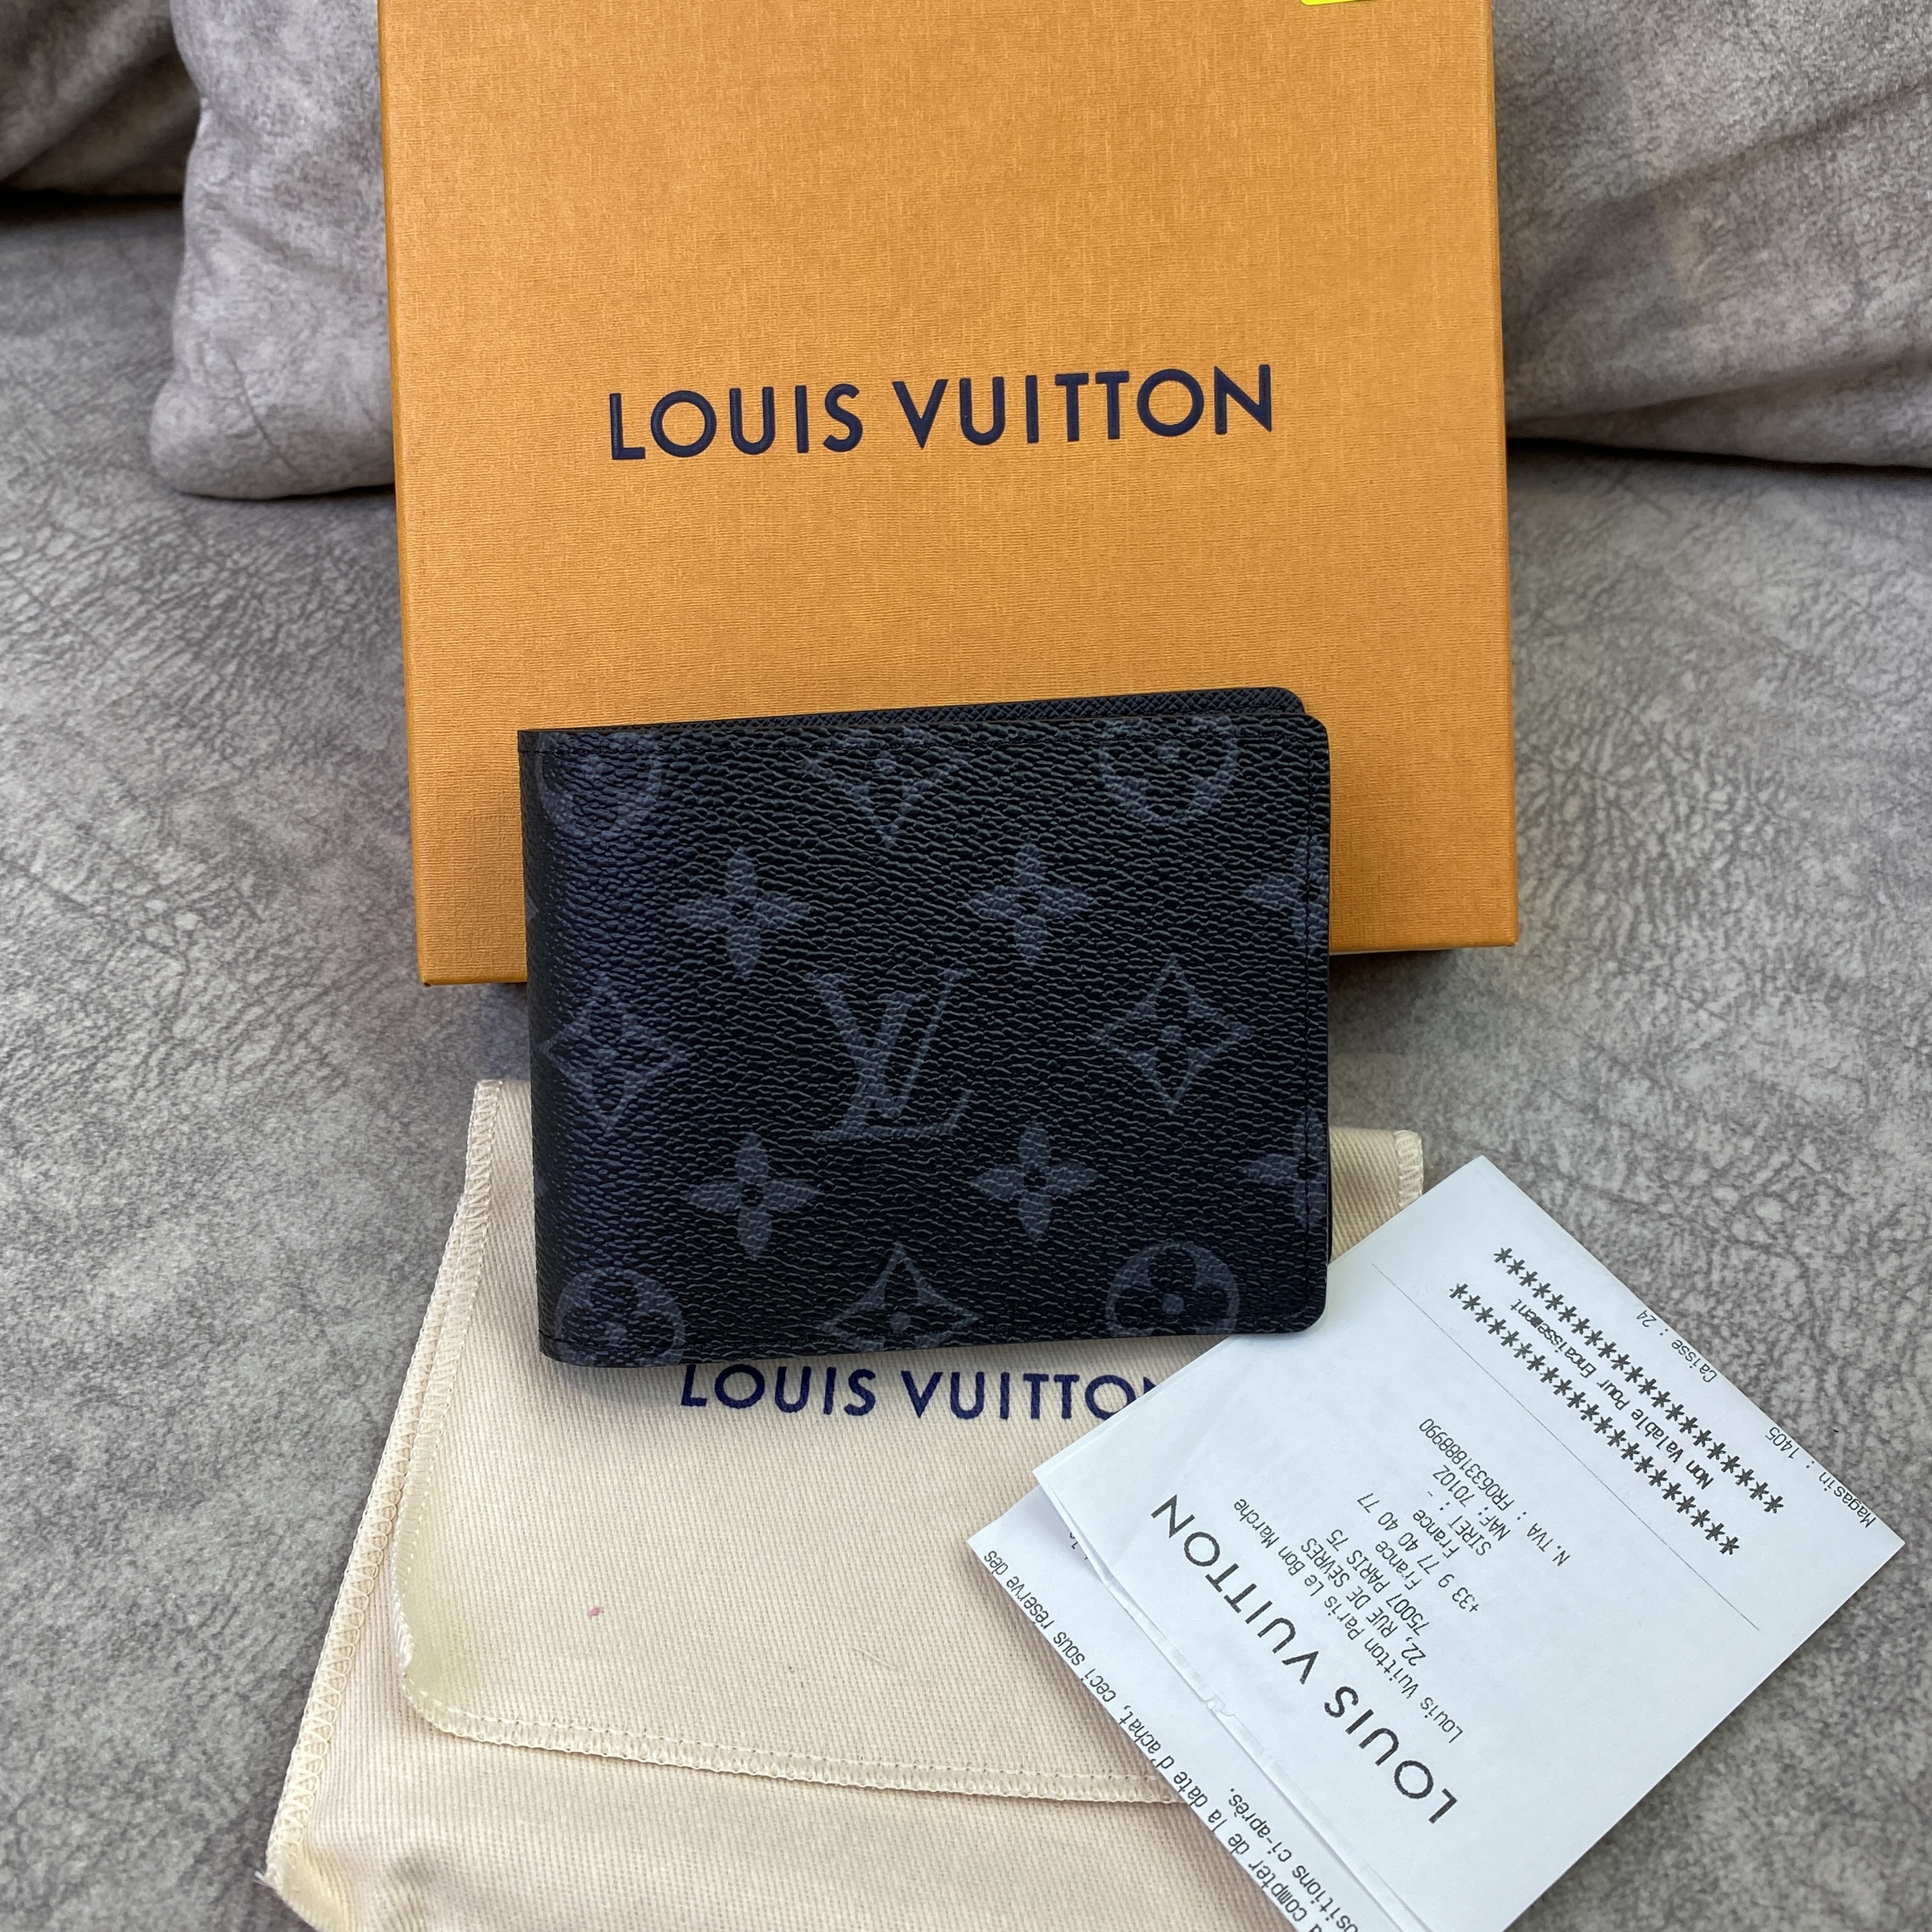 LOUIS VUITTON MULTIPLE WALLET LEATHER MONOGRAM NOIR – Lbite Luxury Branded  - Your Trusted Luxury Expert